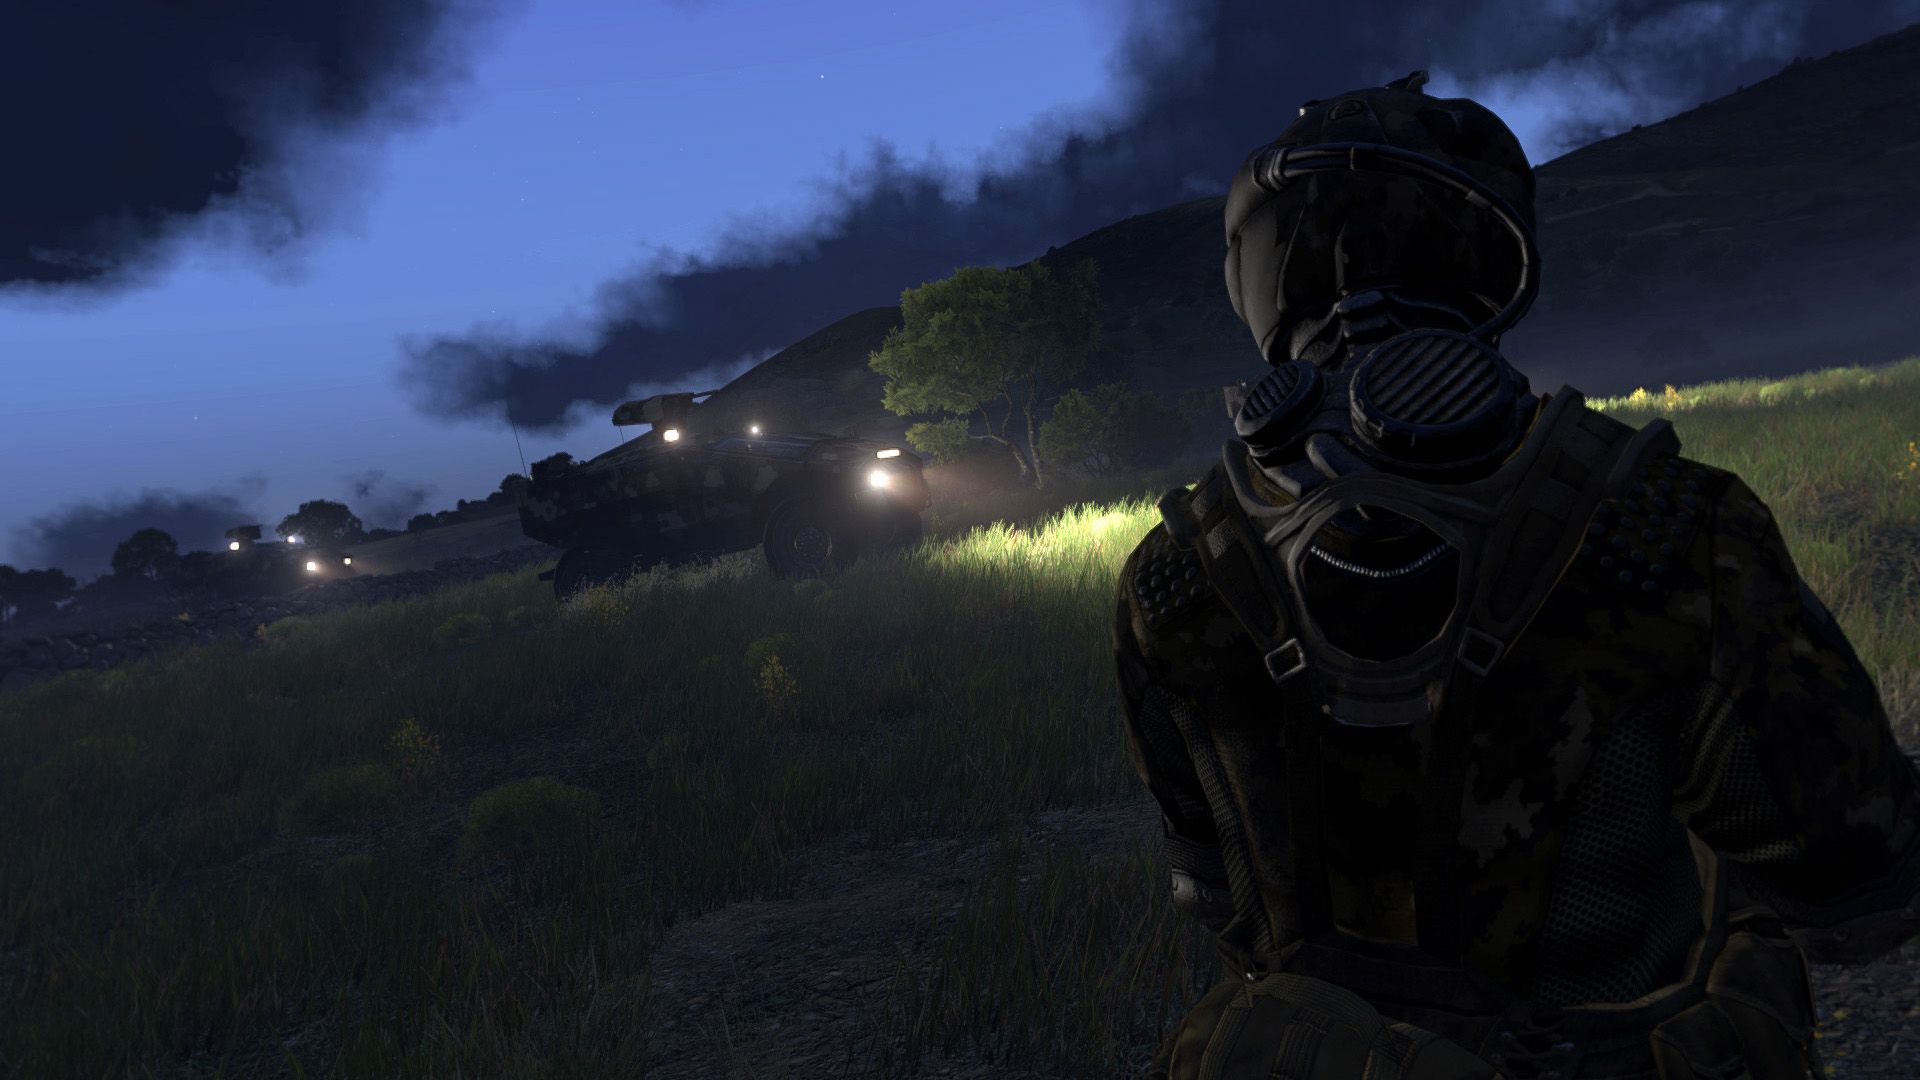 Arma 3 Mod Turns It Into a Halo Game